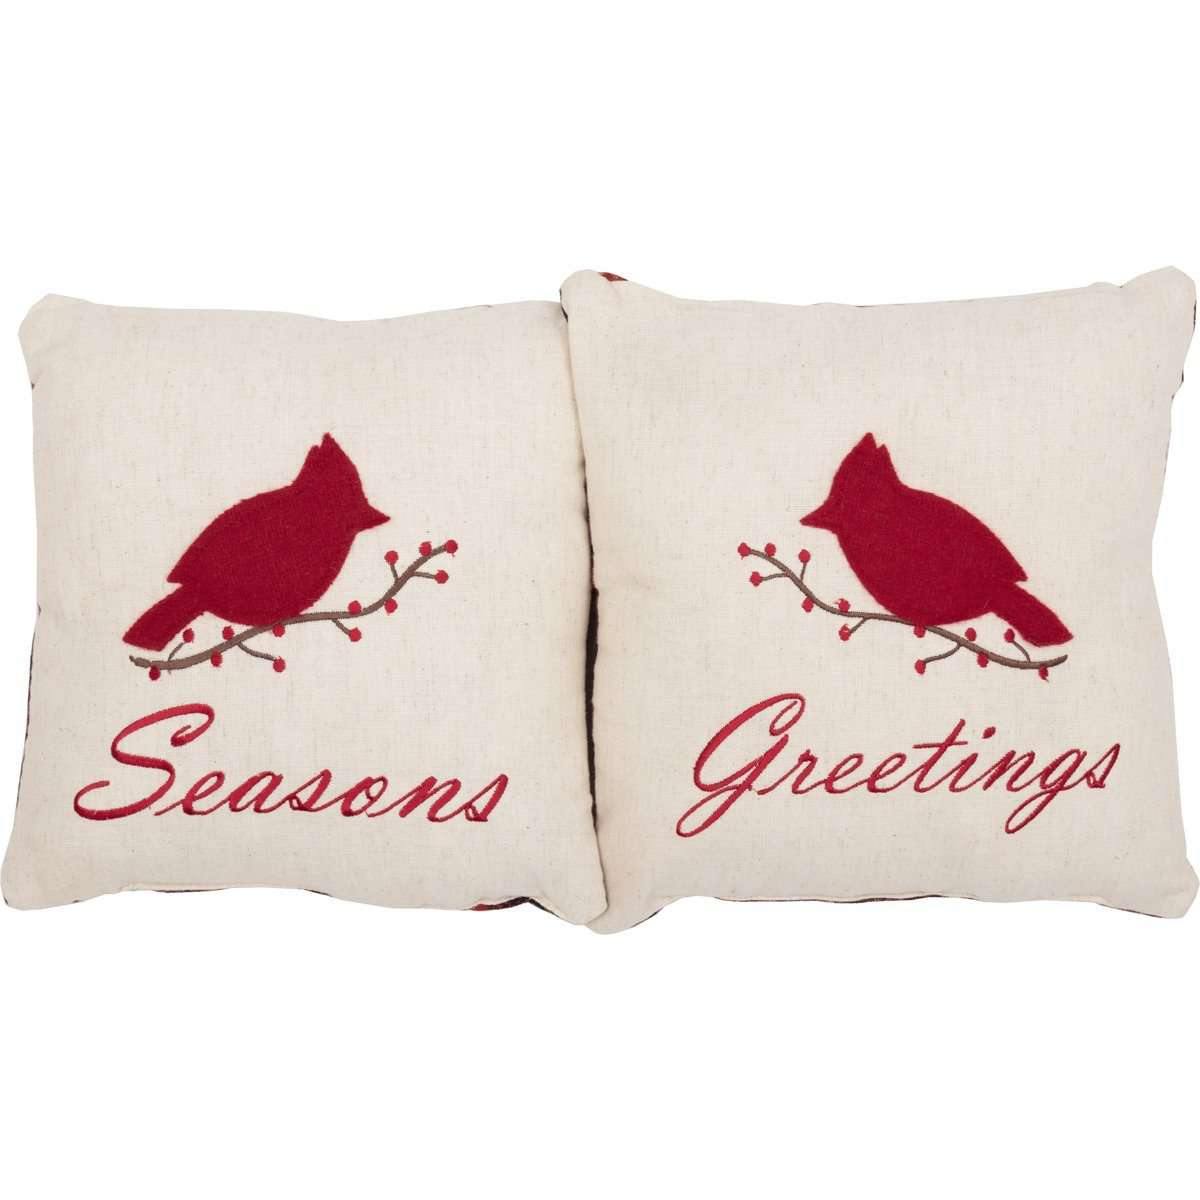 Seasons Greetings Pillow Set of 2 10x10 - The Fox Decor